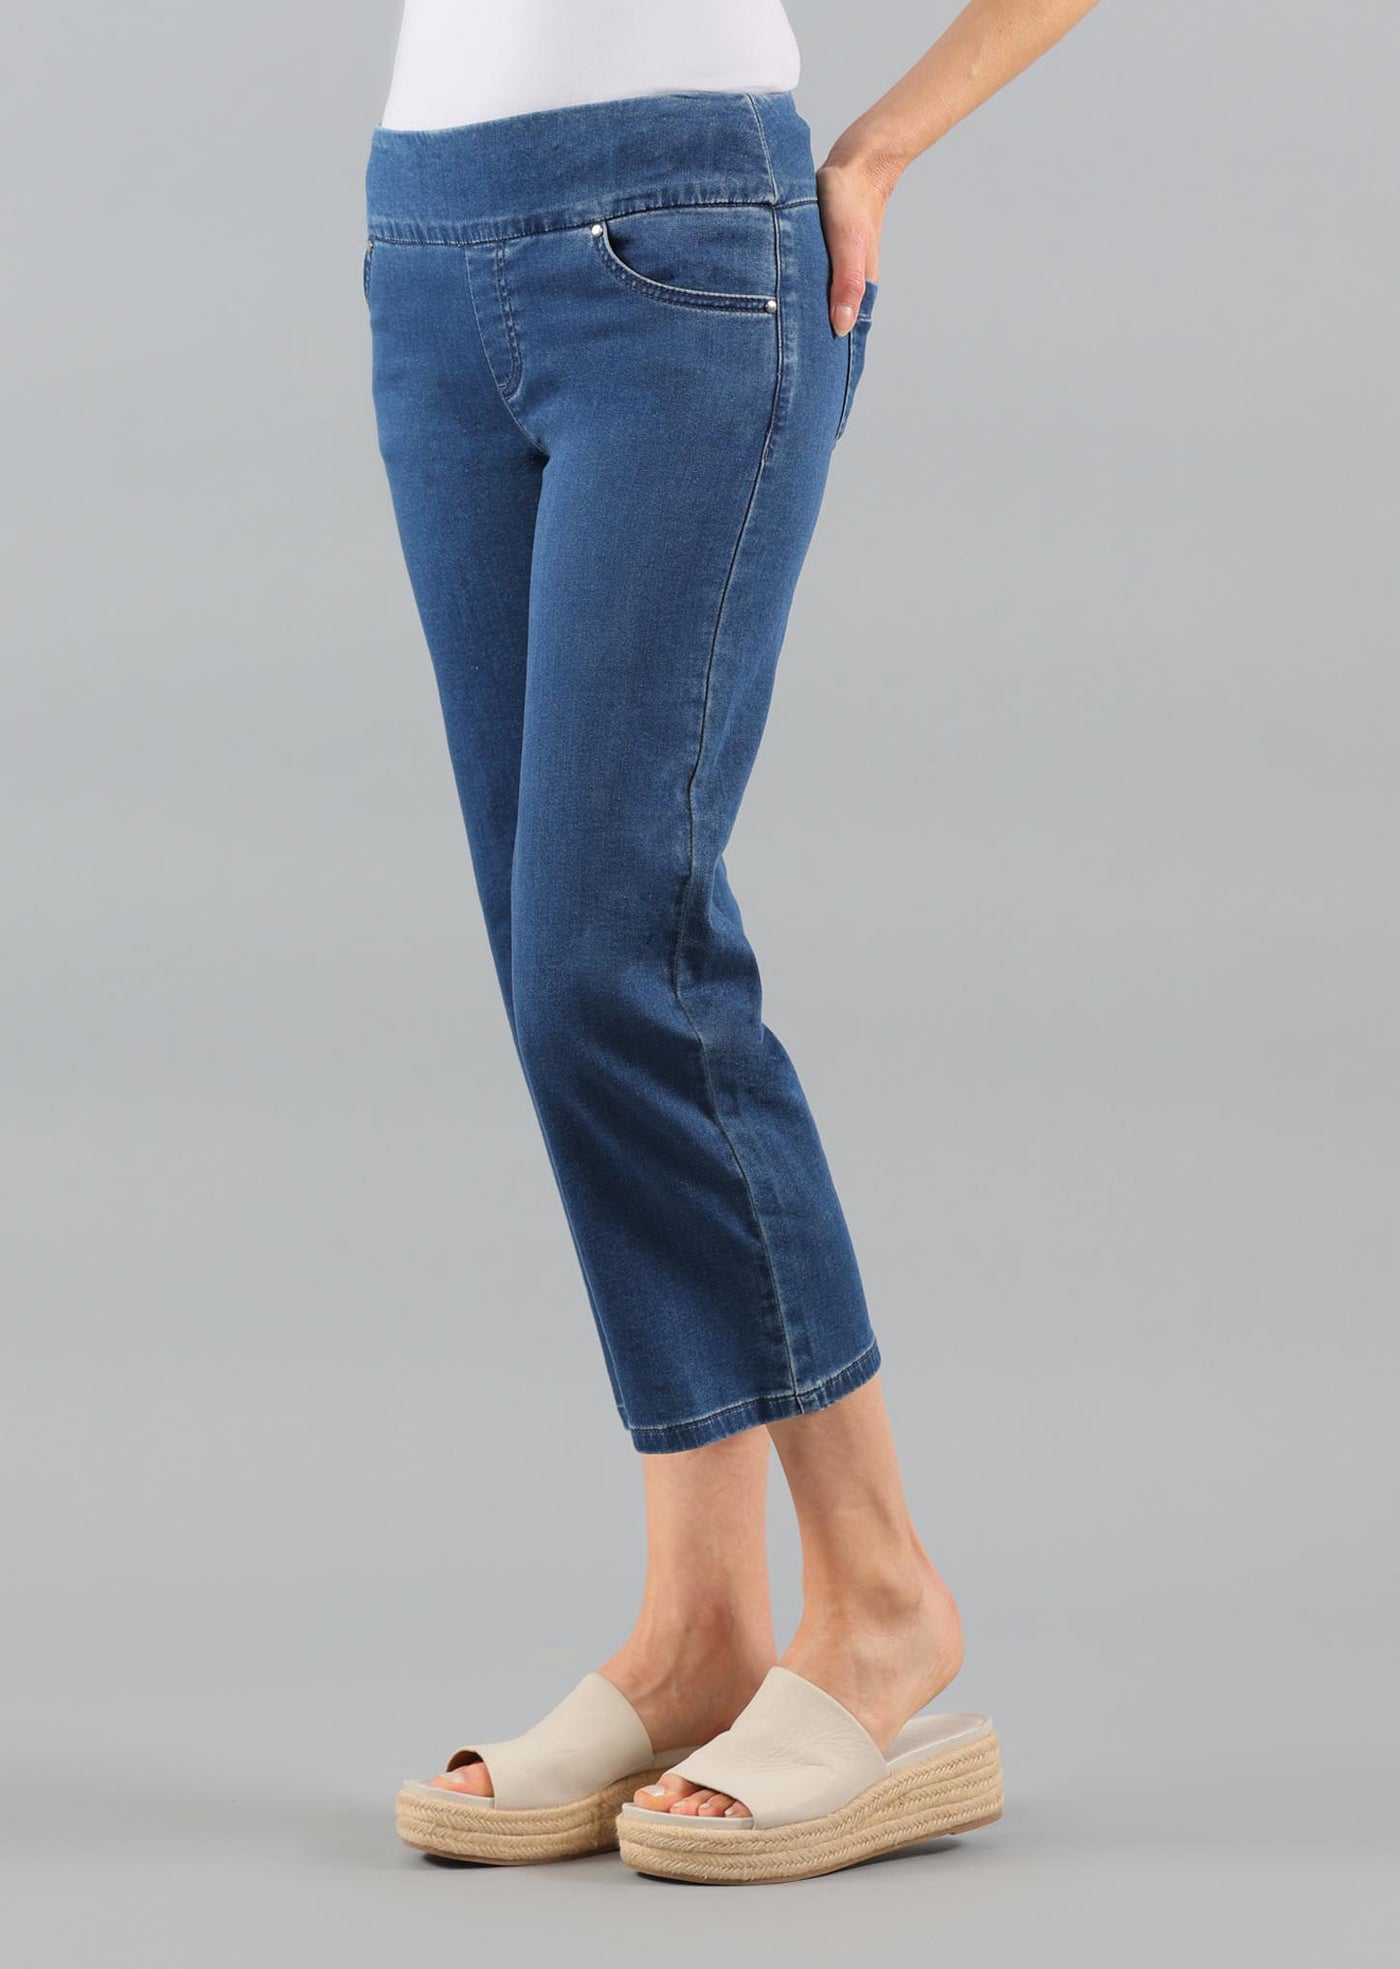 Lisette L Straight Leg Crop Jeans 